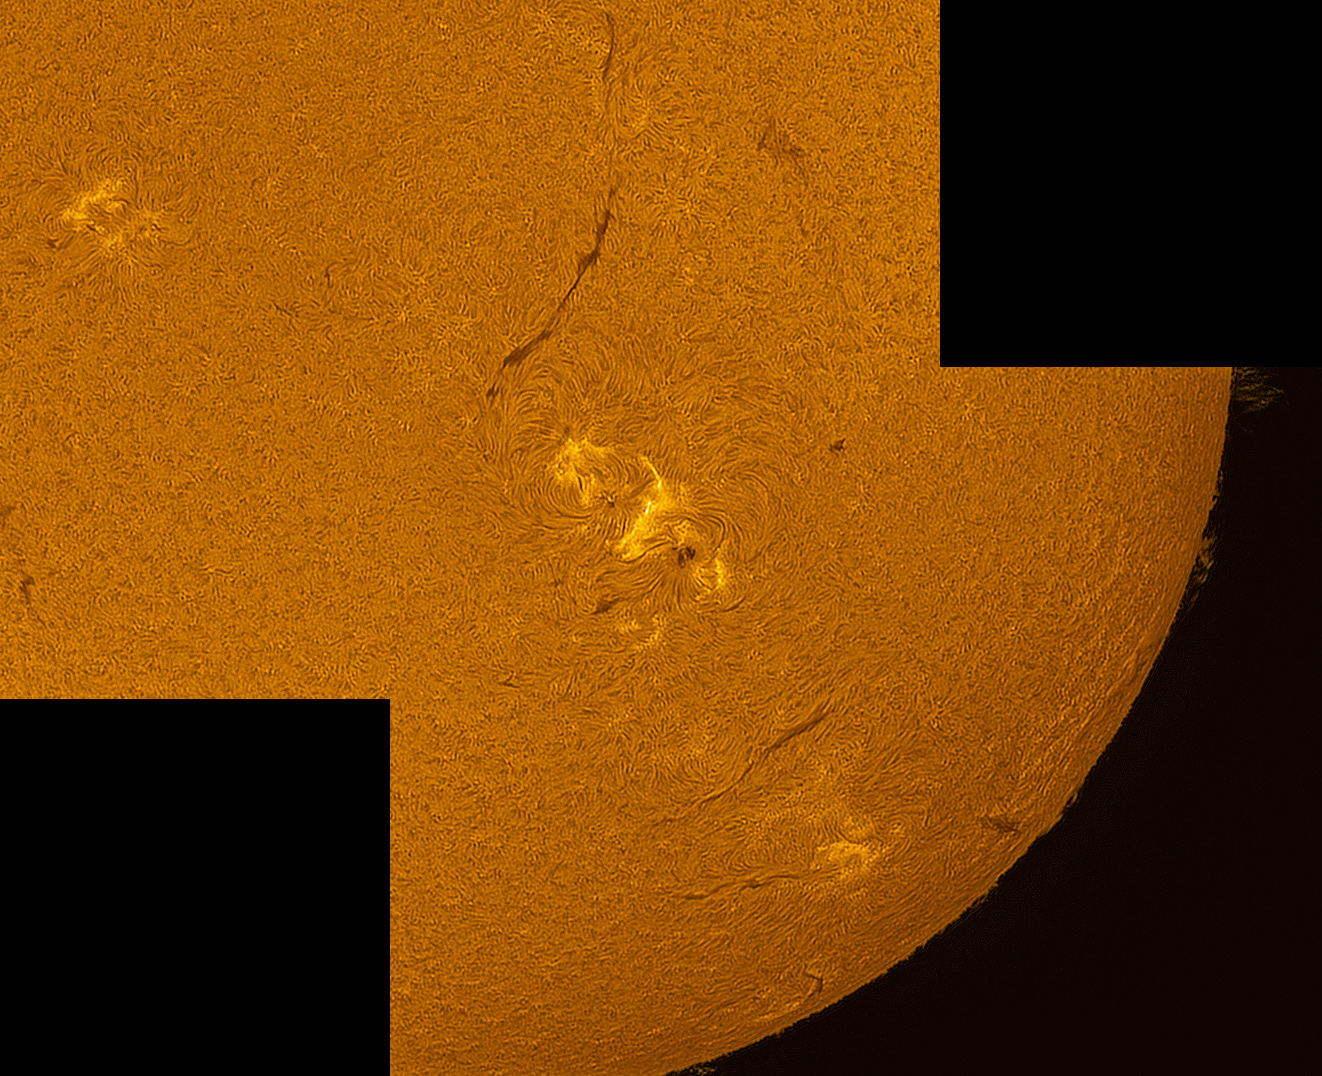 sun20160719-09h10UT-sm40DS-fs60-gpx1.25-BF10-bx2.5-dmk41-SP-r75.jpg